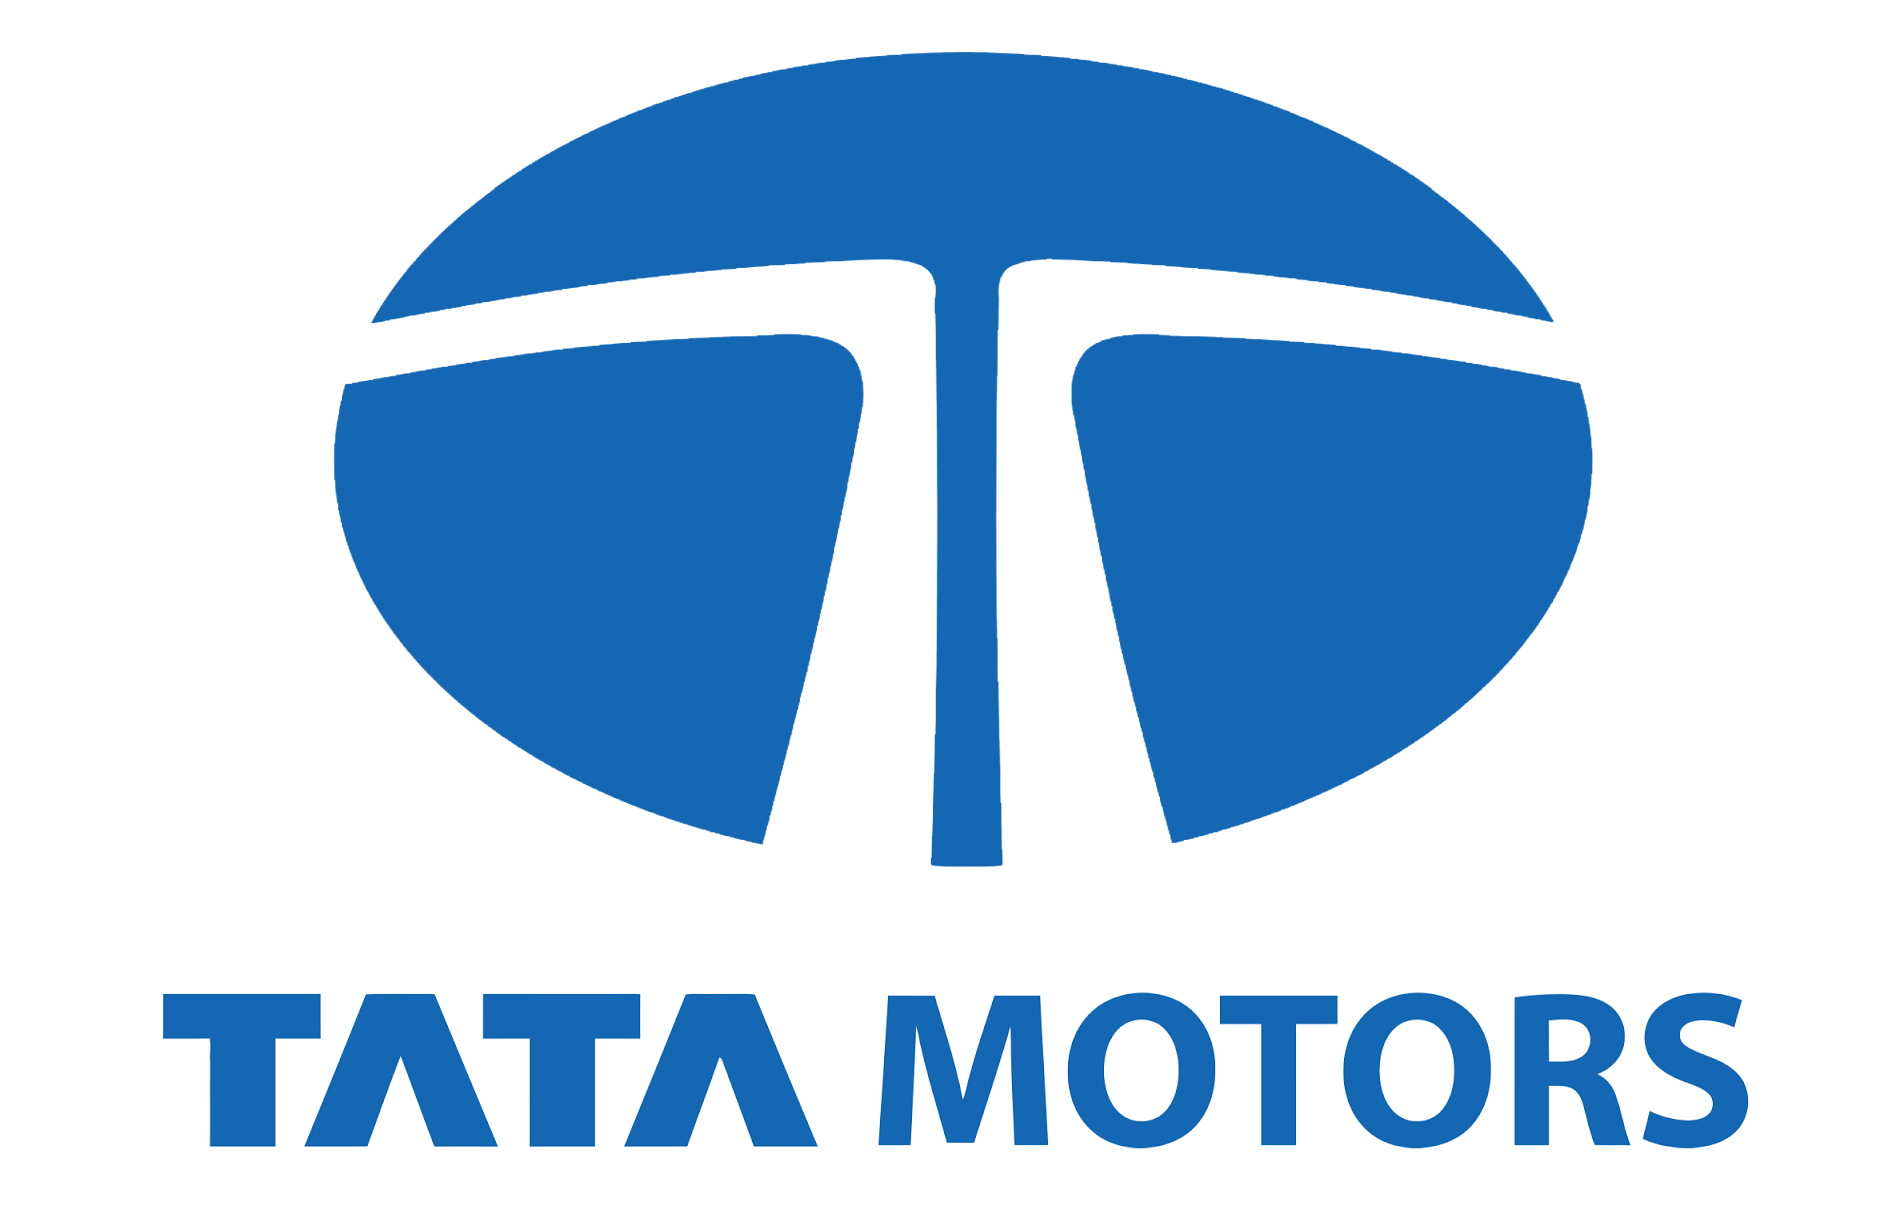 Tata Motors Cars Showroom - Seven Autocorp|Show Room|Automotive